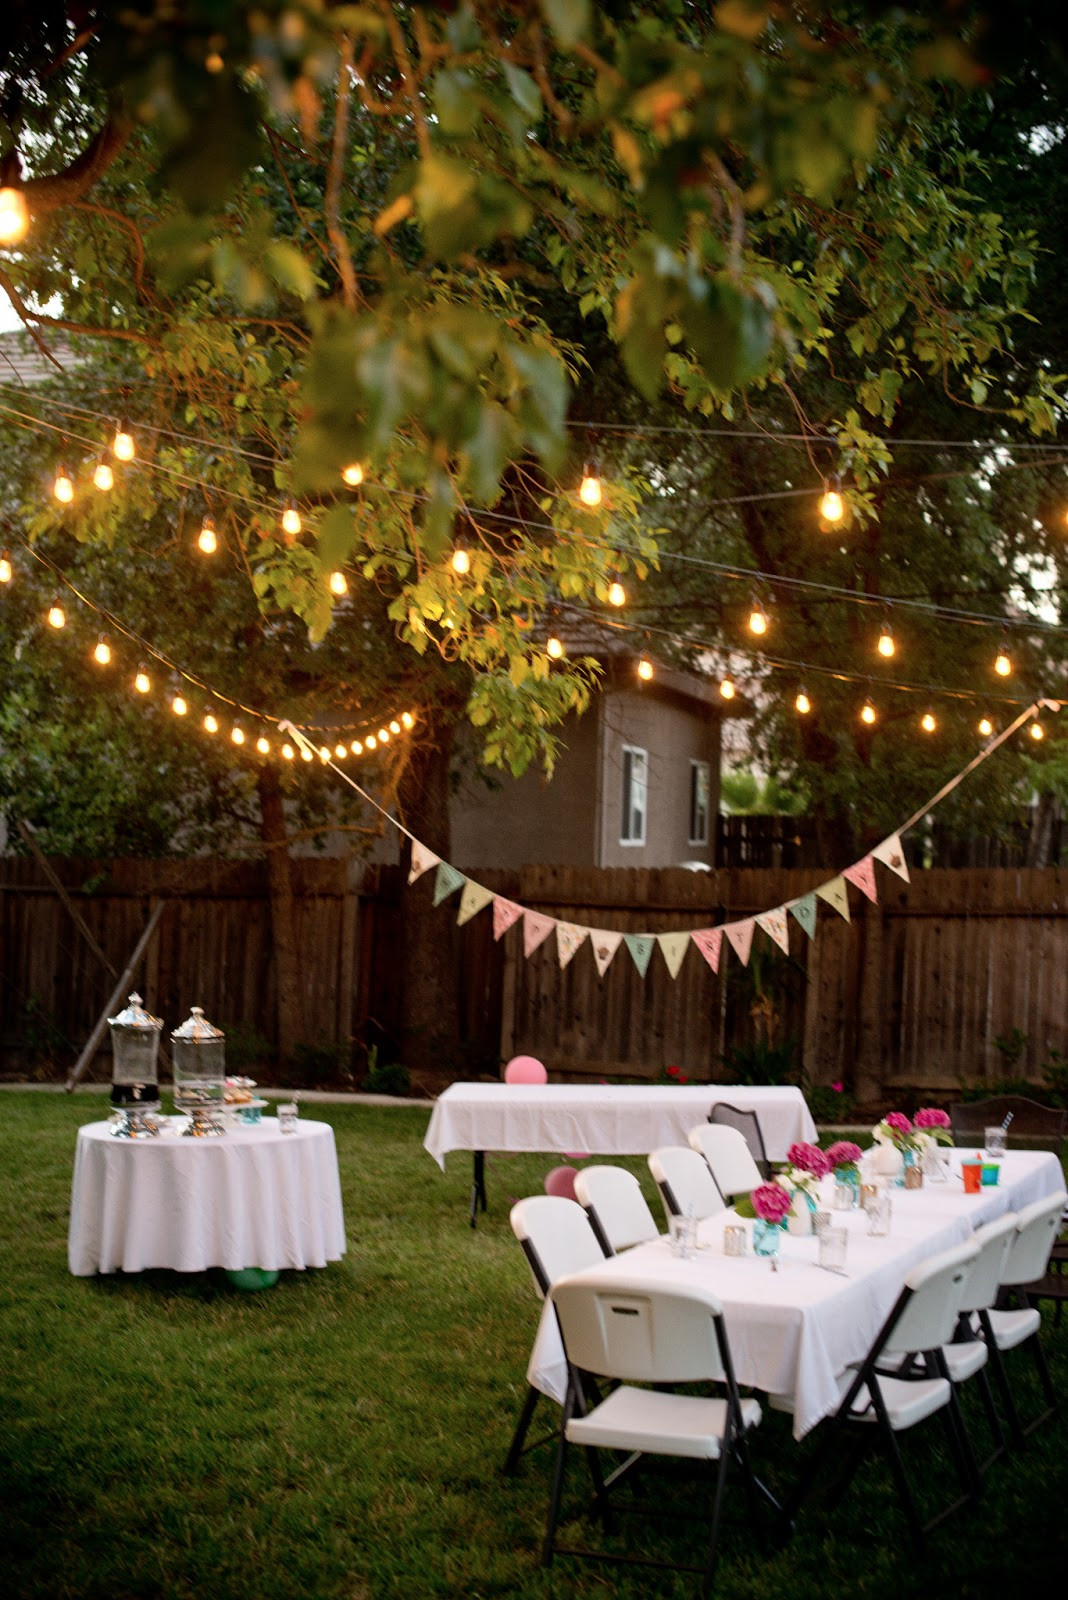 Backyard Party Design Ideas
 Domestic Fashionista Backyard Birthday Fun Pink